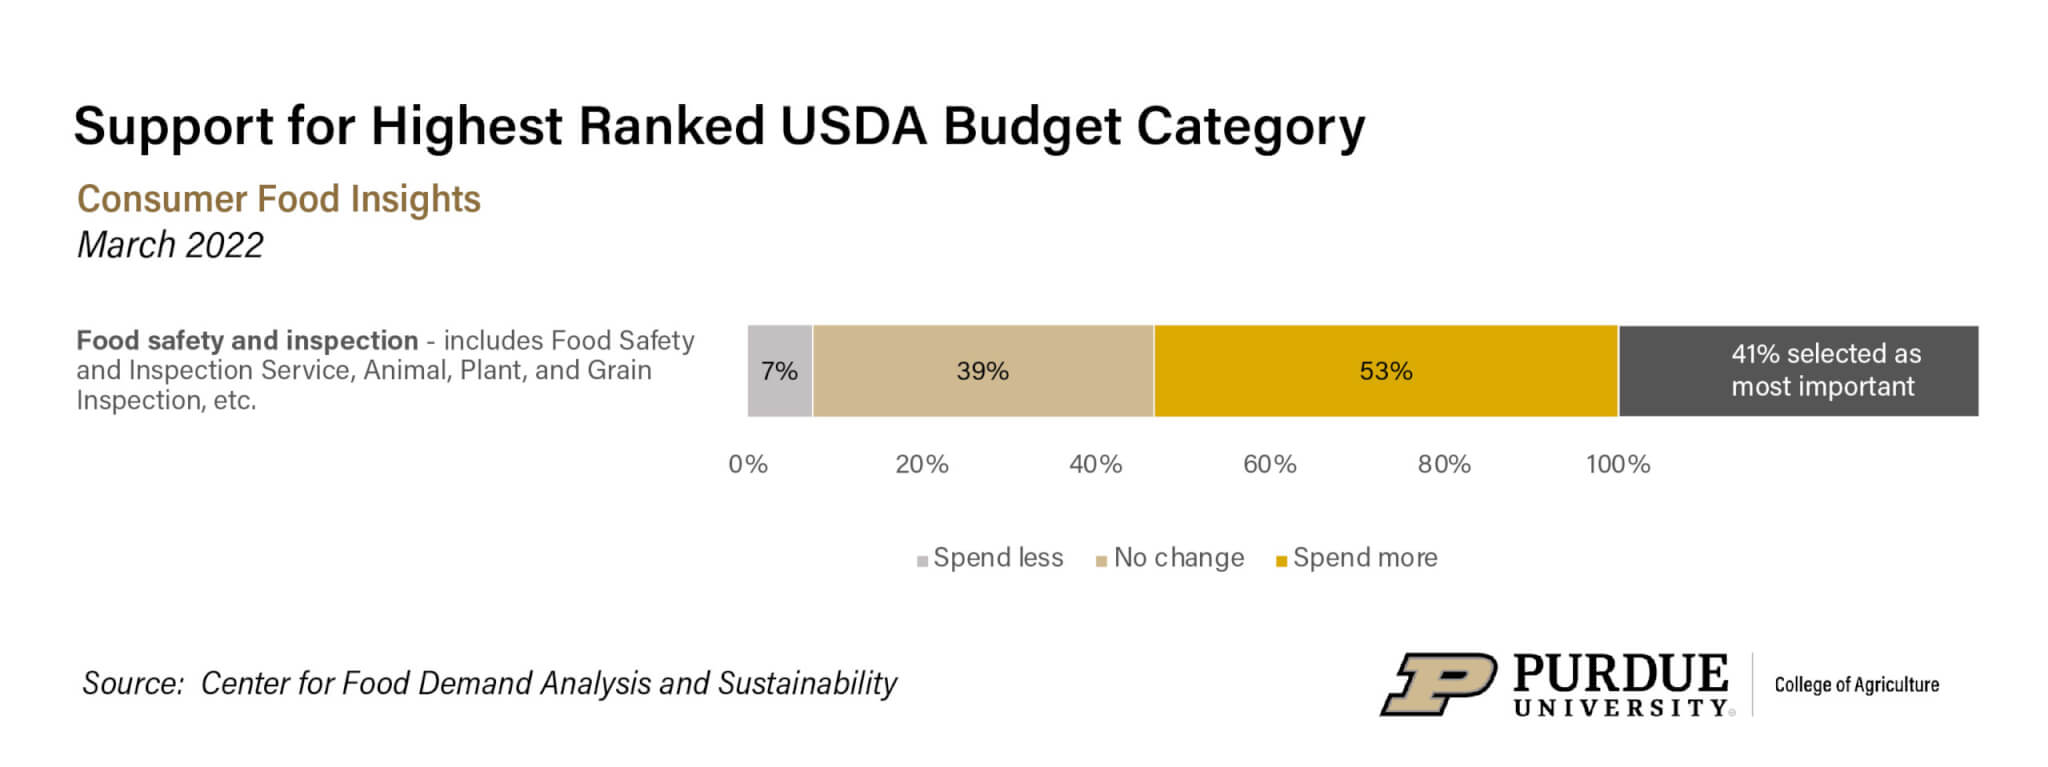 Support for Highest Ranked USDA Budget Category